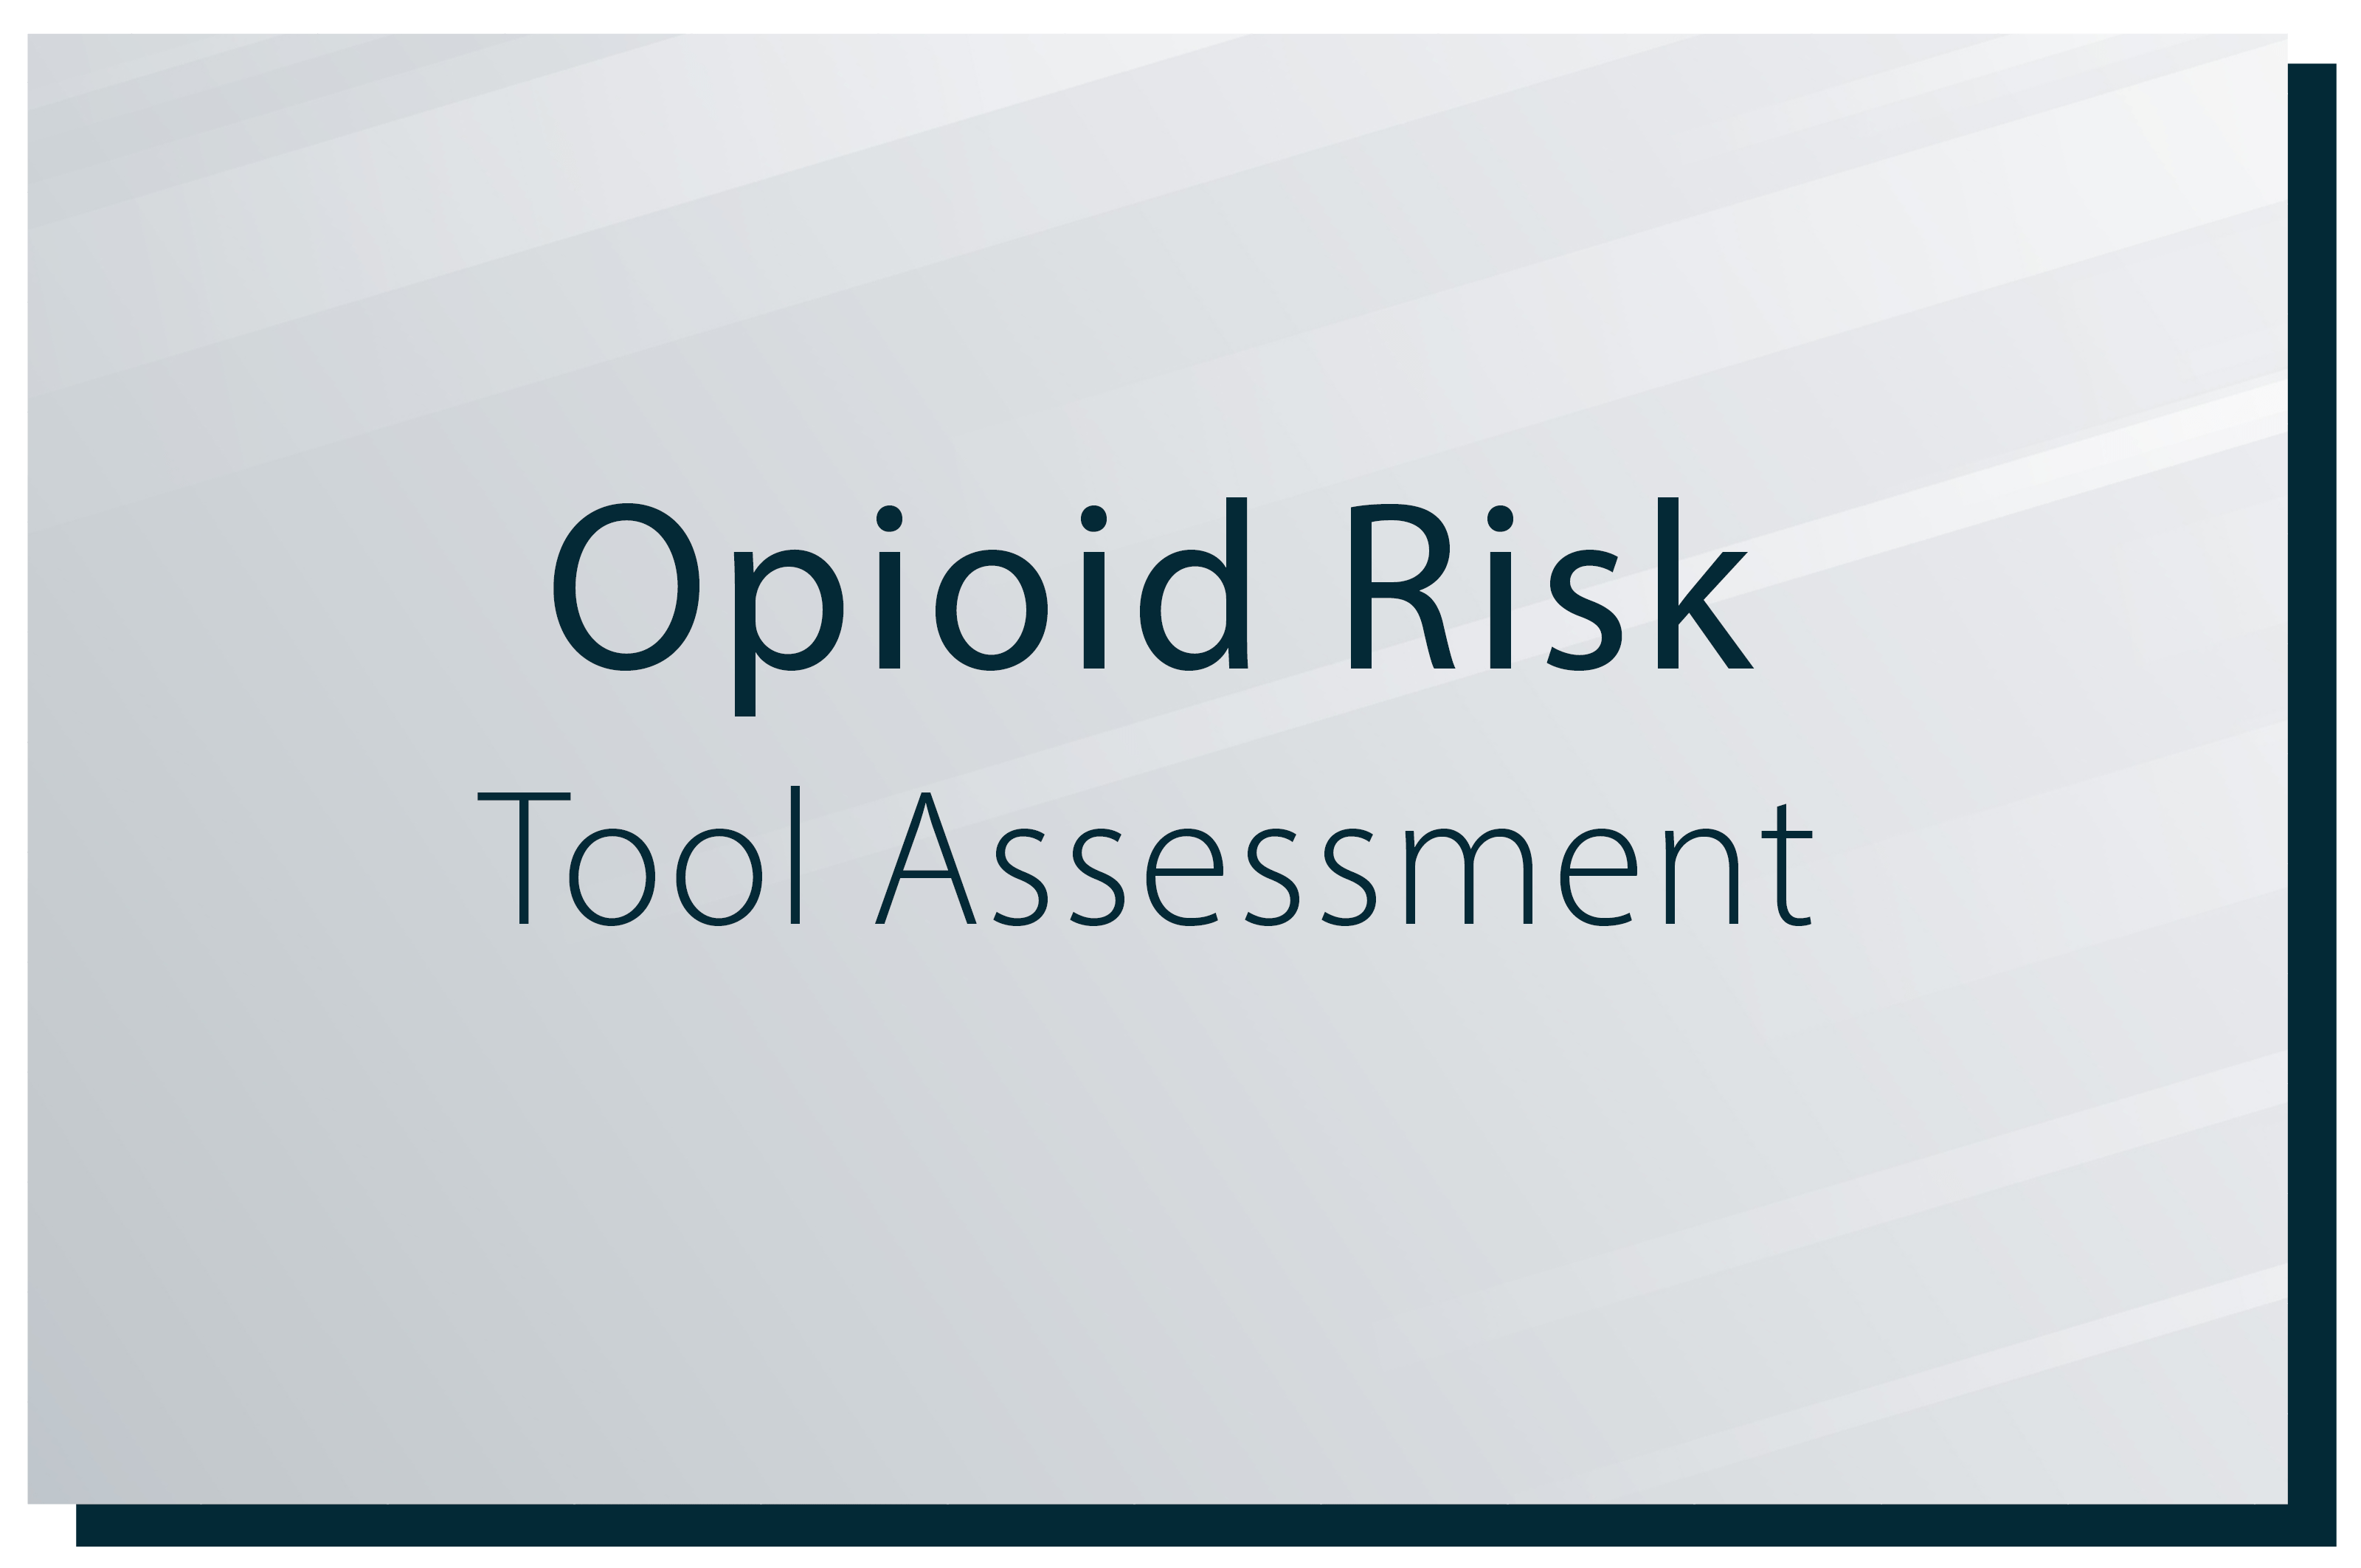 Opioid addiction risk tool